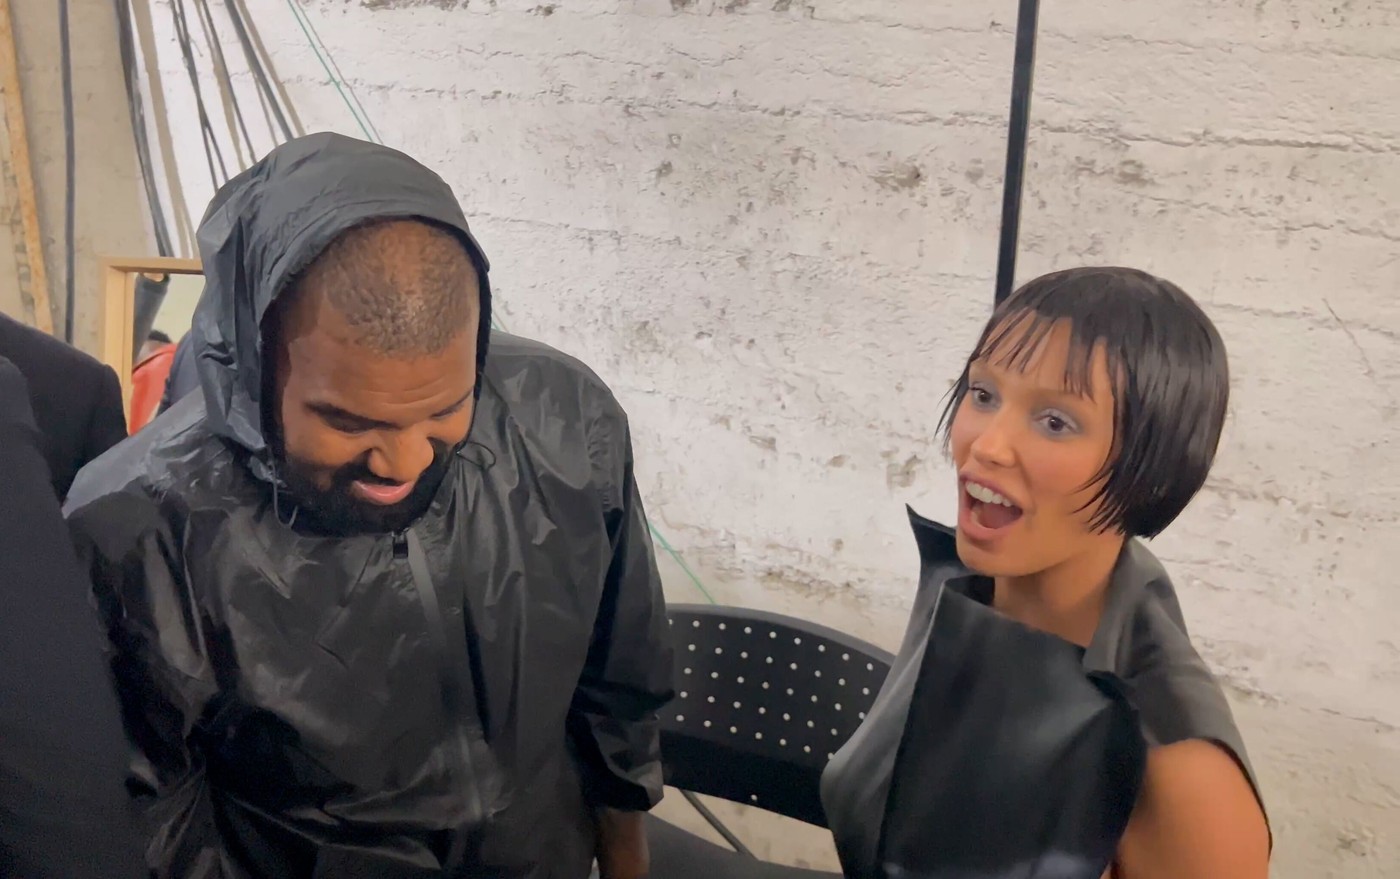 Bianca Censori și Kanye West, în haine negre, în Milano